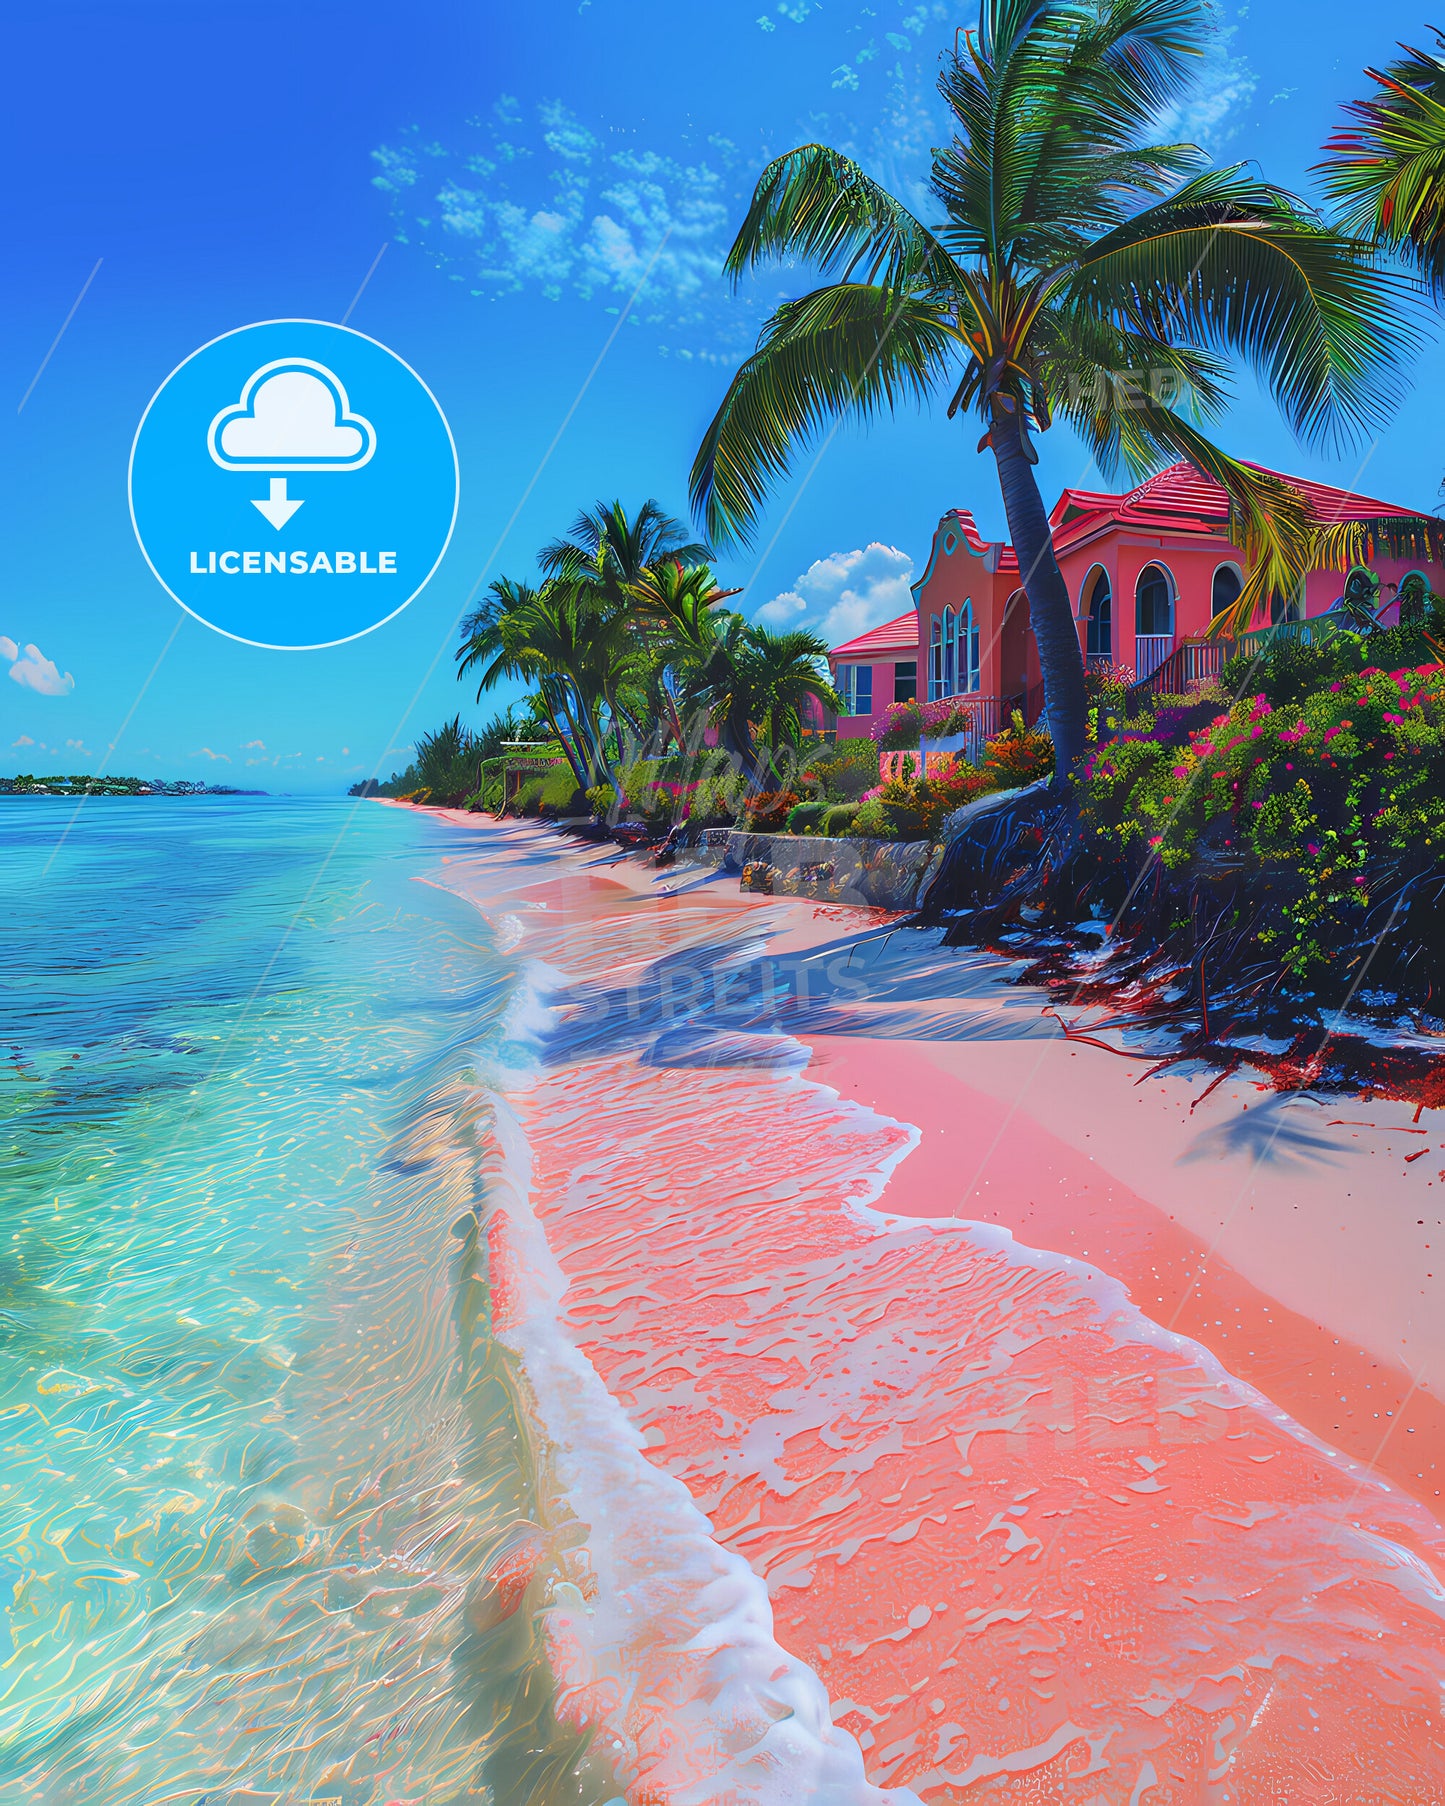 Vibrant Bahamas Beach Scene: Pink Sands, Palm Trees, and Caribbean House